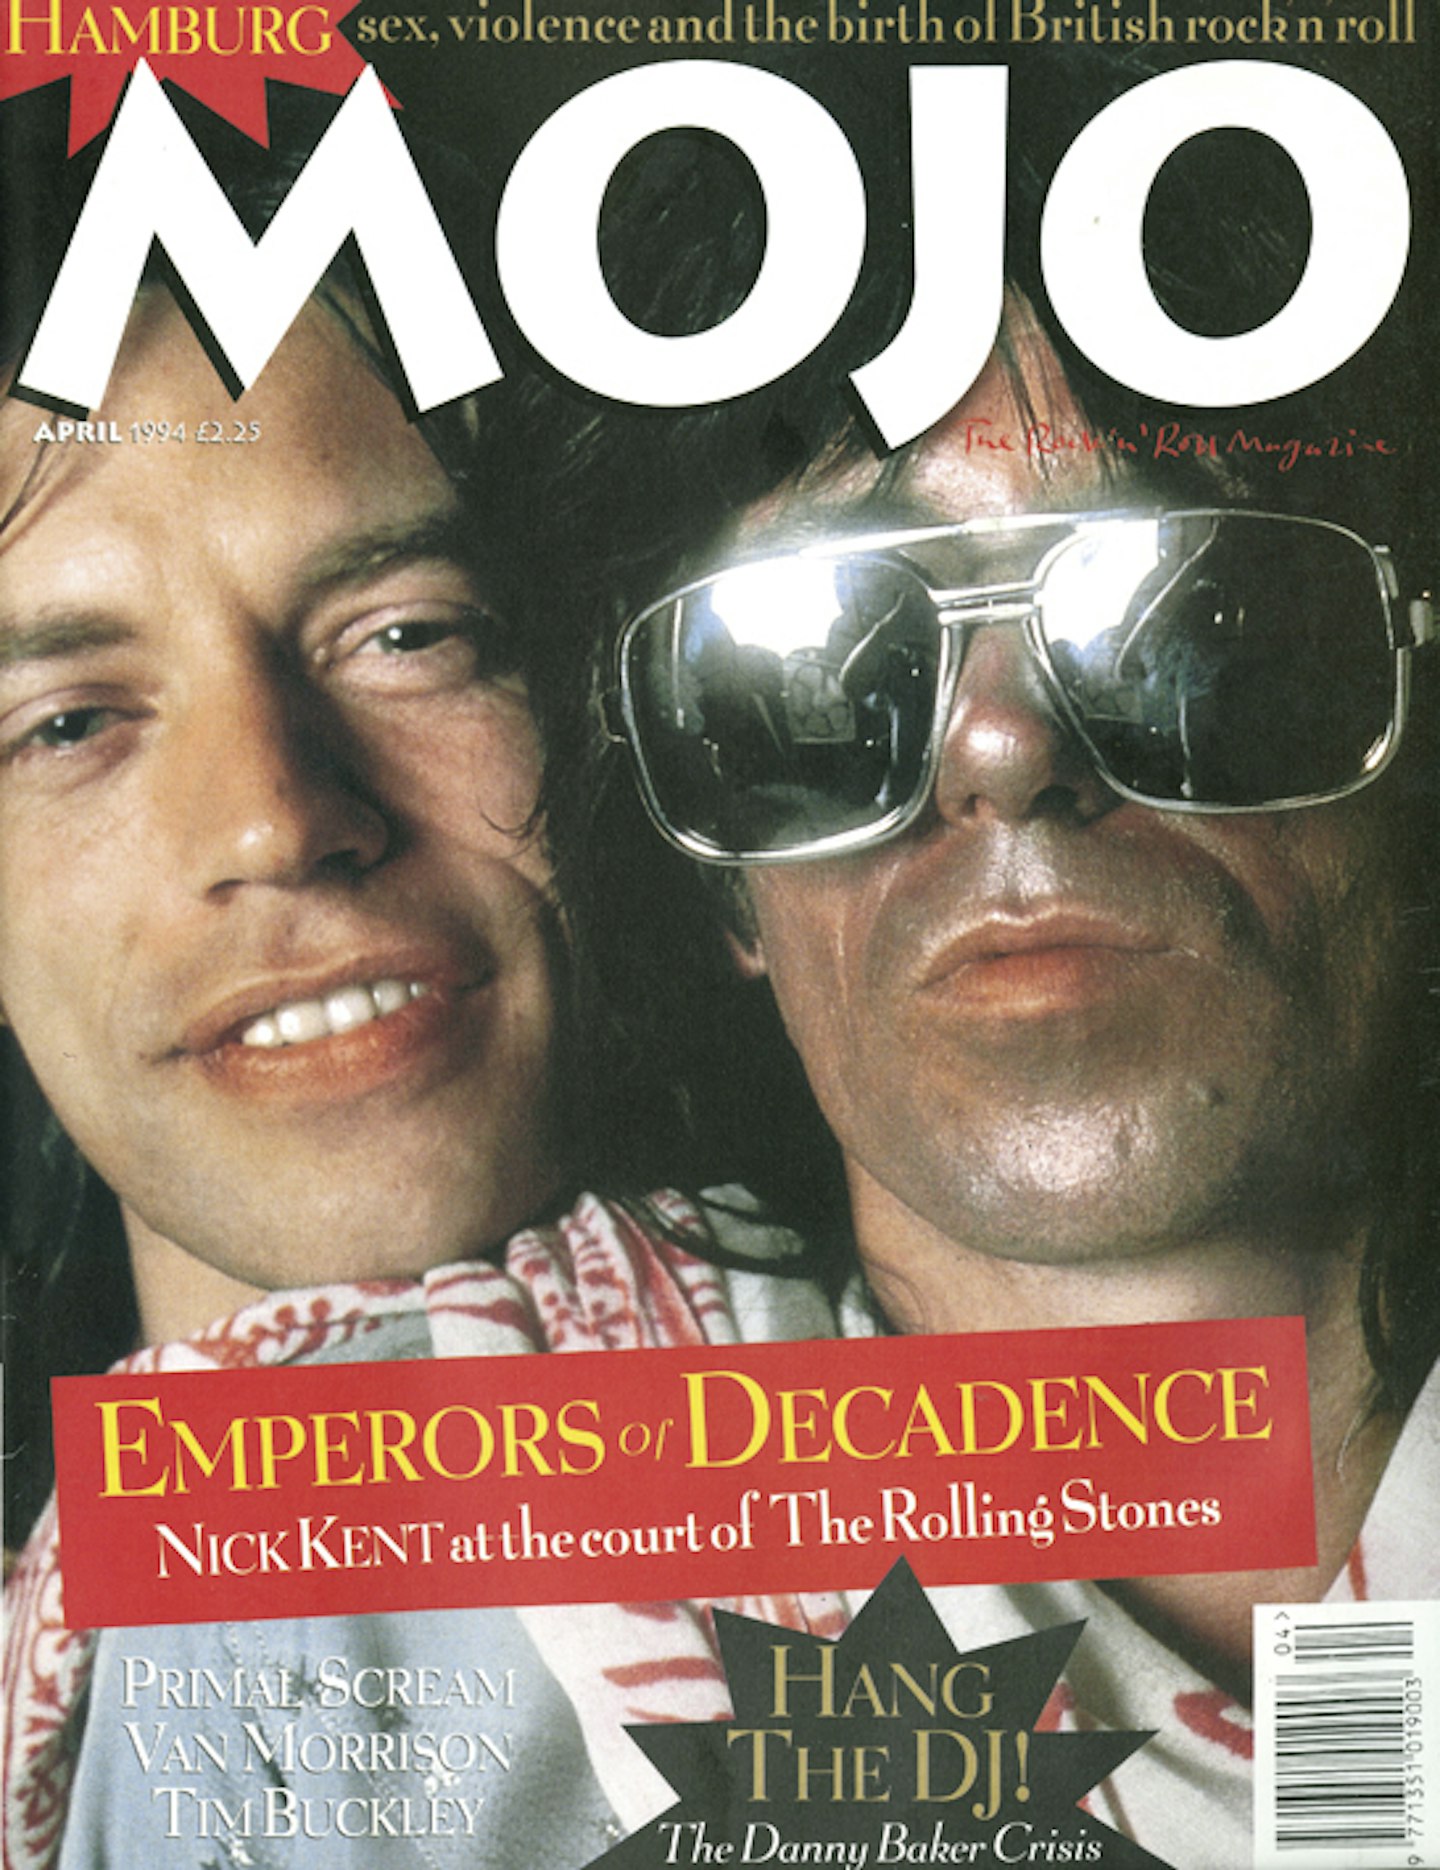 MOJO Issue 5 / April 1994